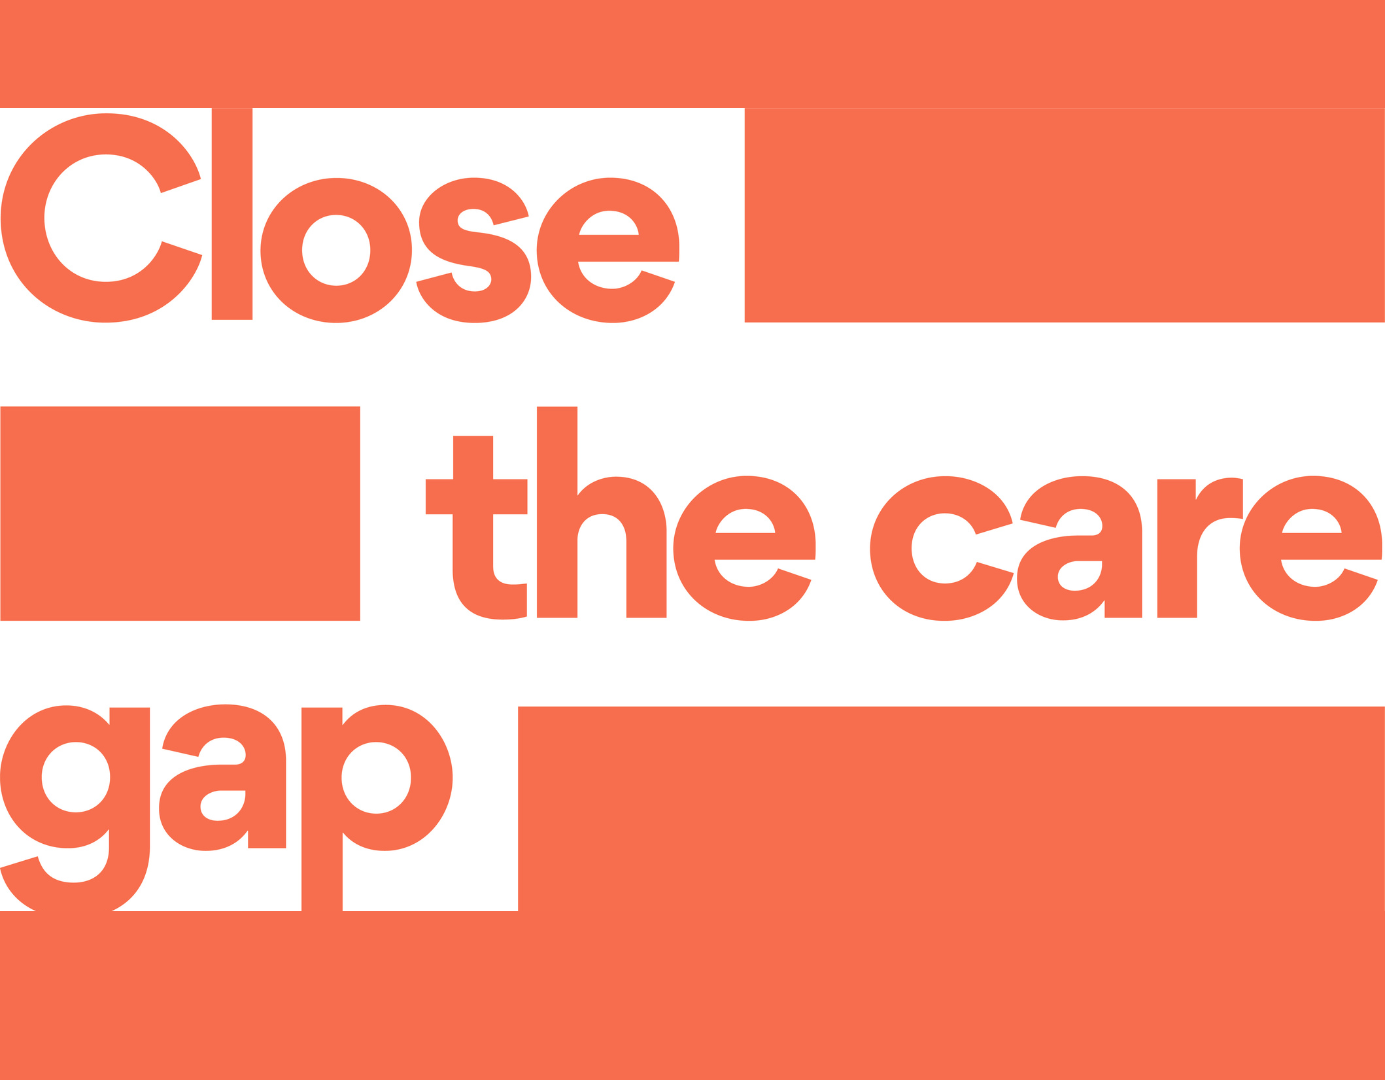 Close the care gap